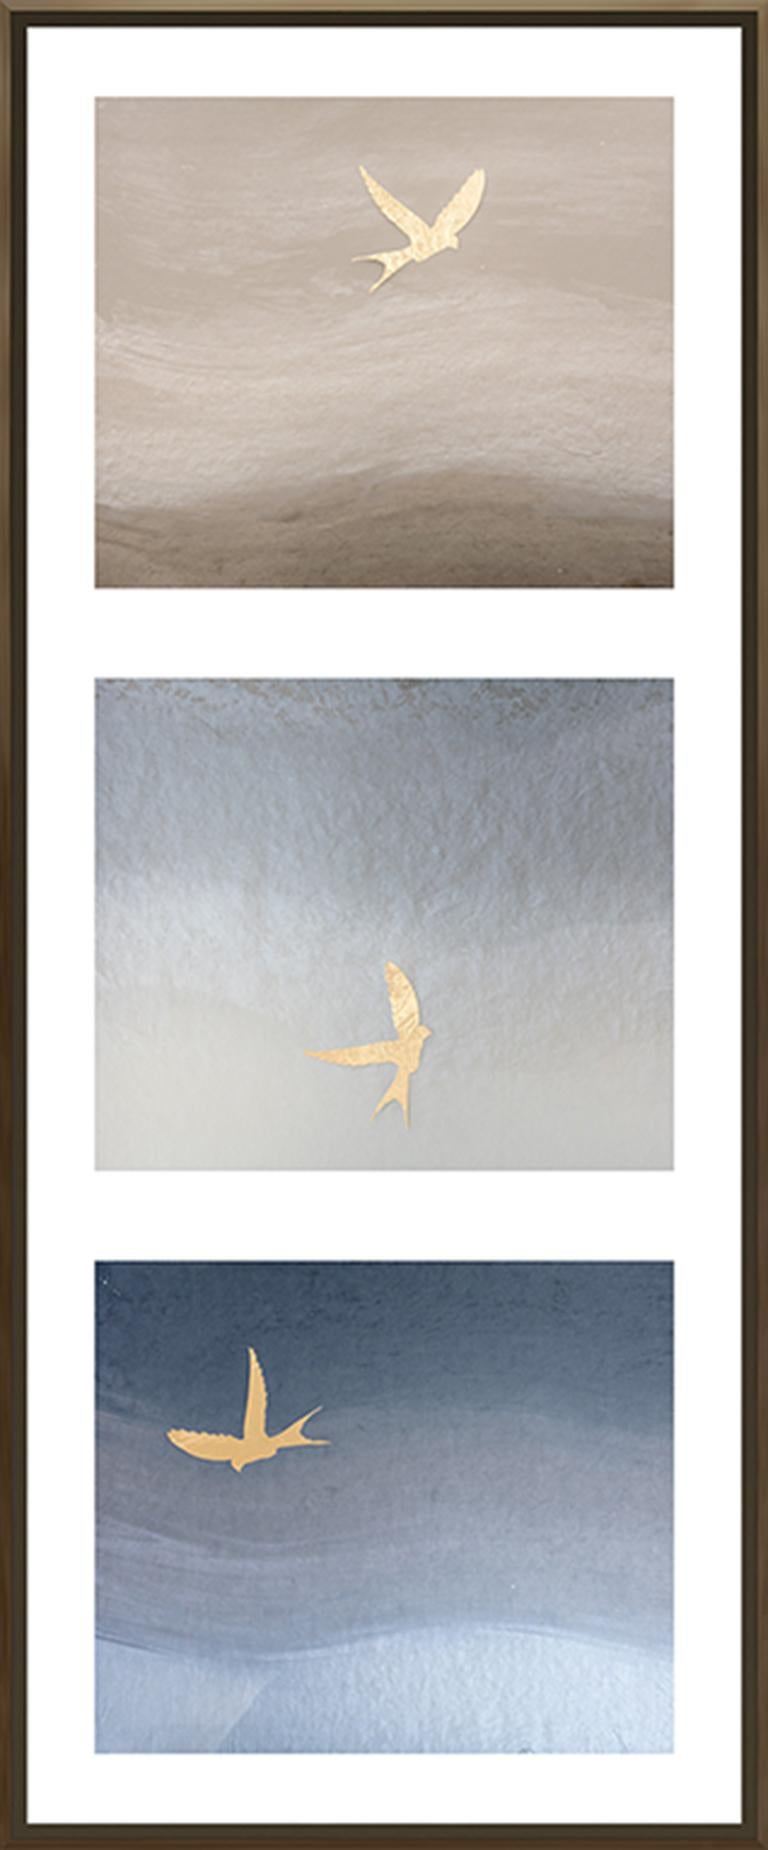 Unknown Animal Print - Birds of Flight, No. 3, gold leaf, framed